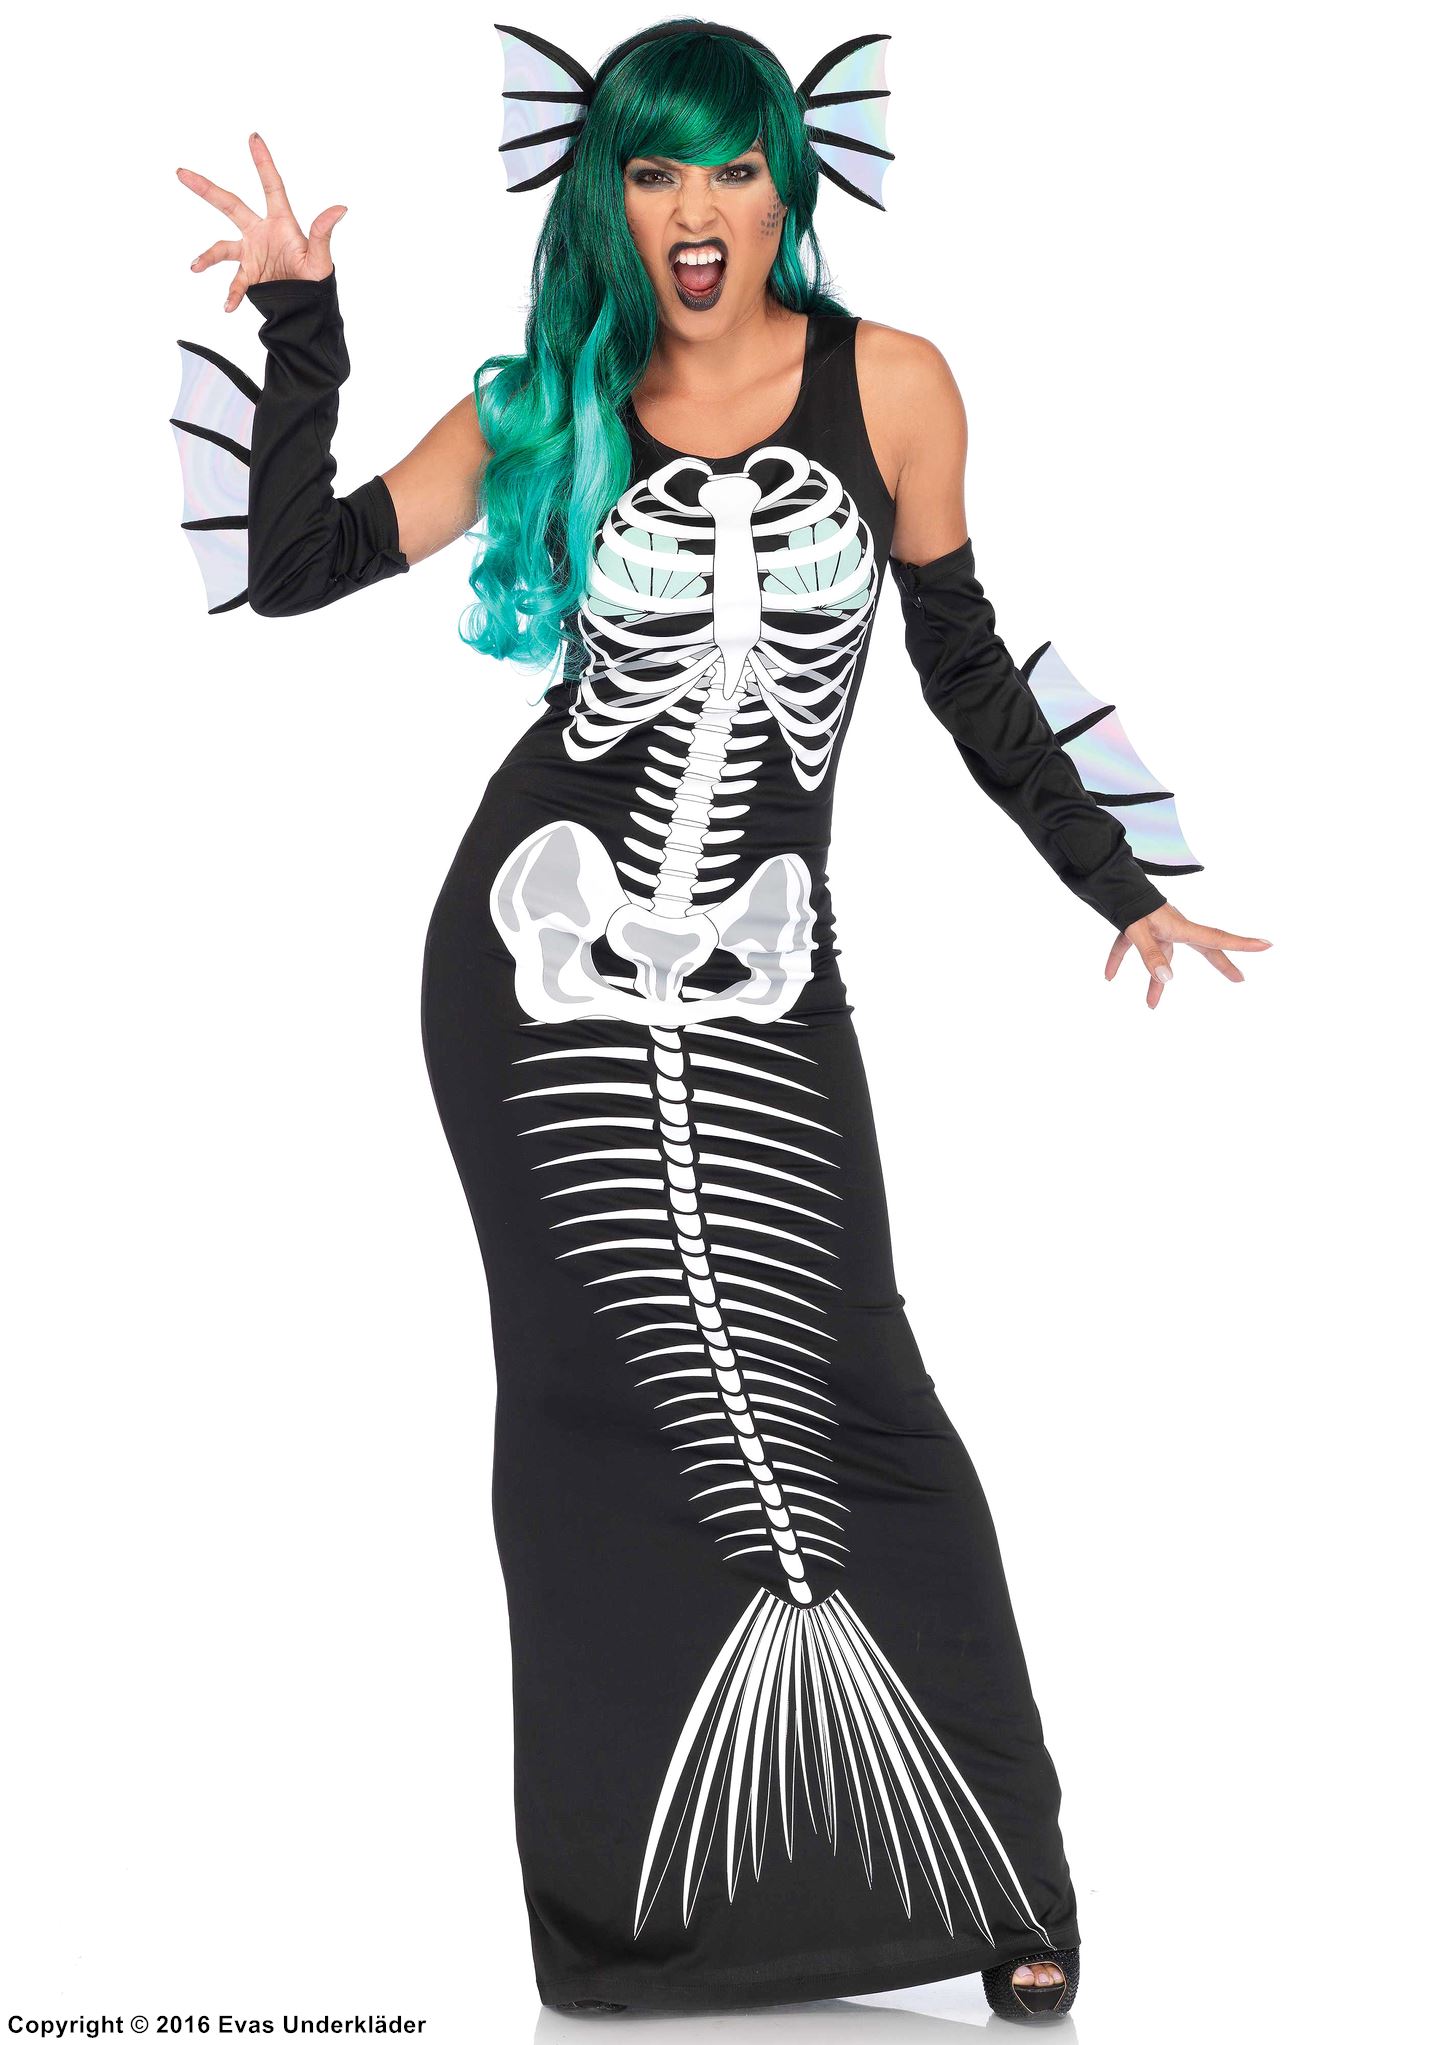 Mermaid skeleton, costume dress, fin